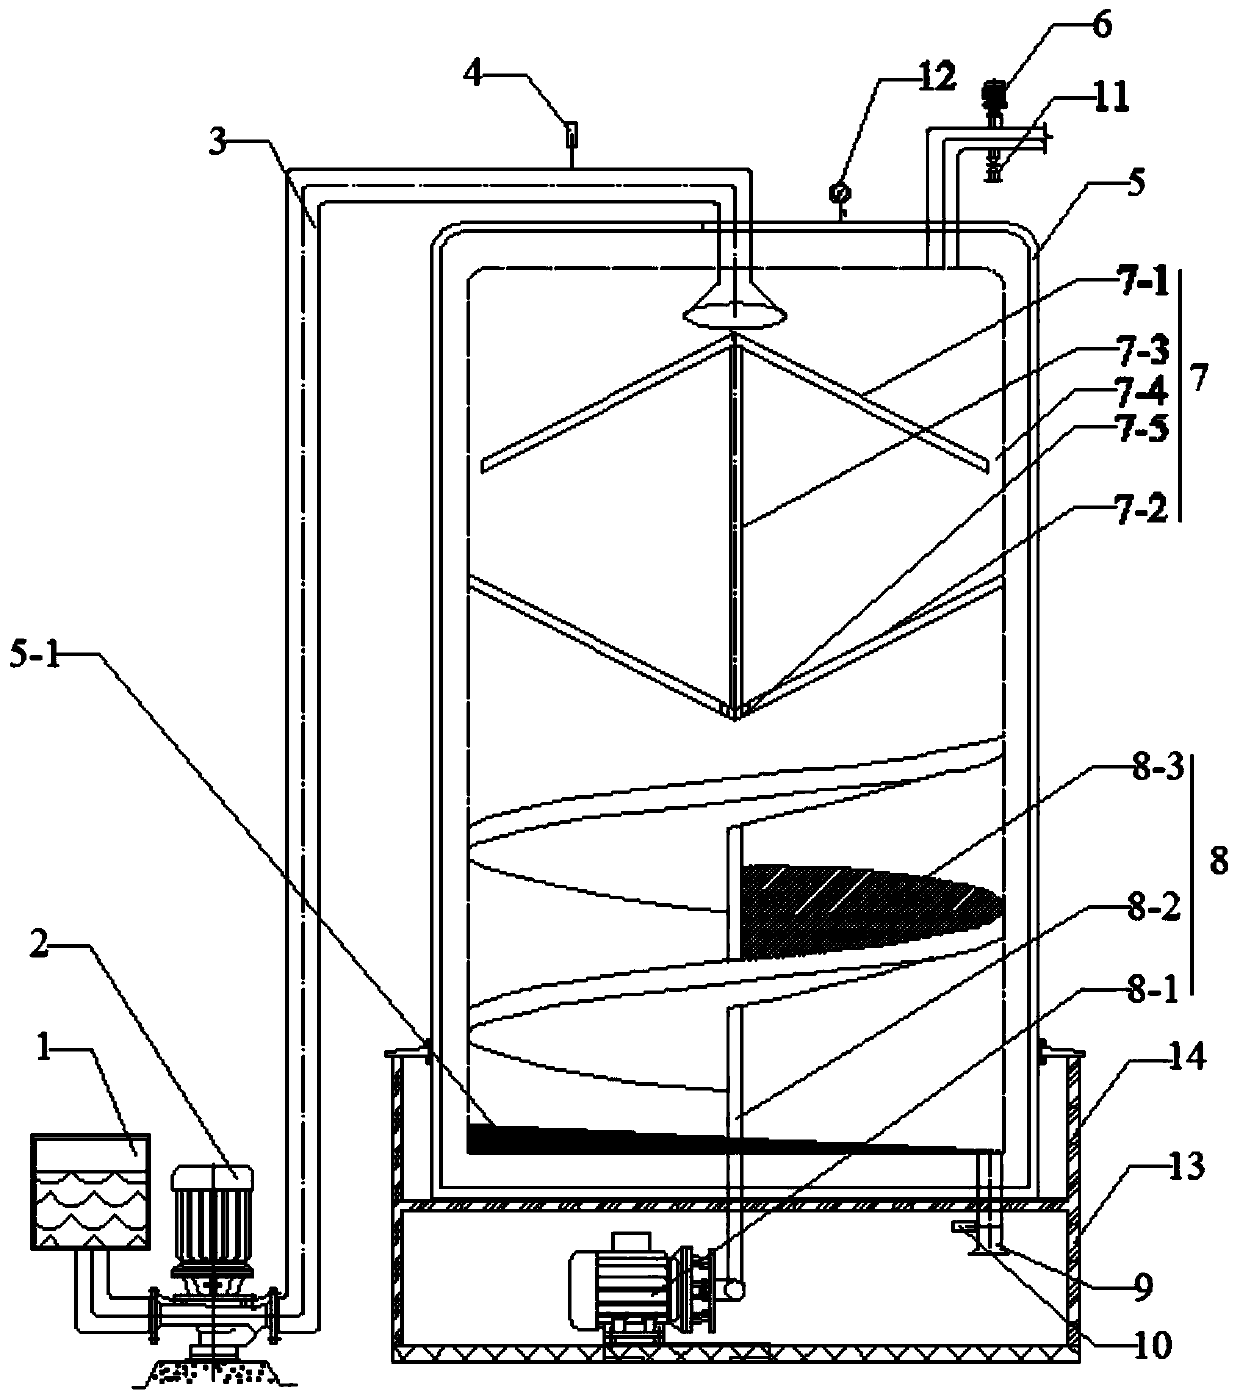 Vacuum defoaming device and defoaming method for high-viscosity liquid